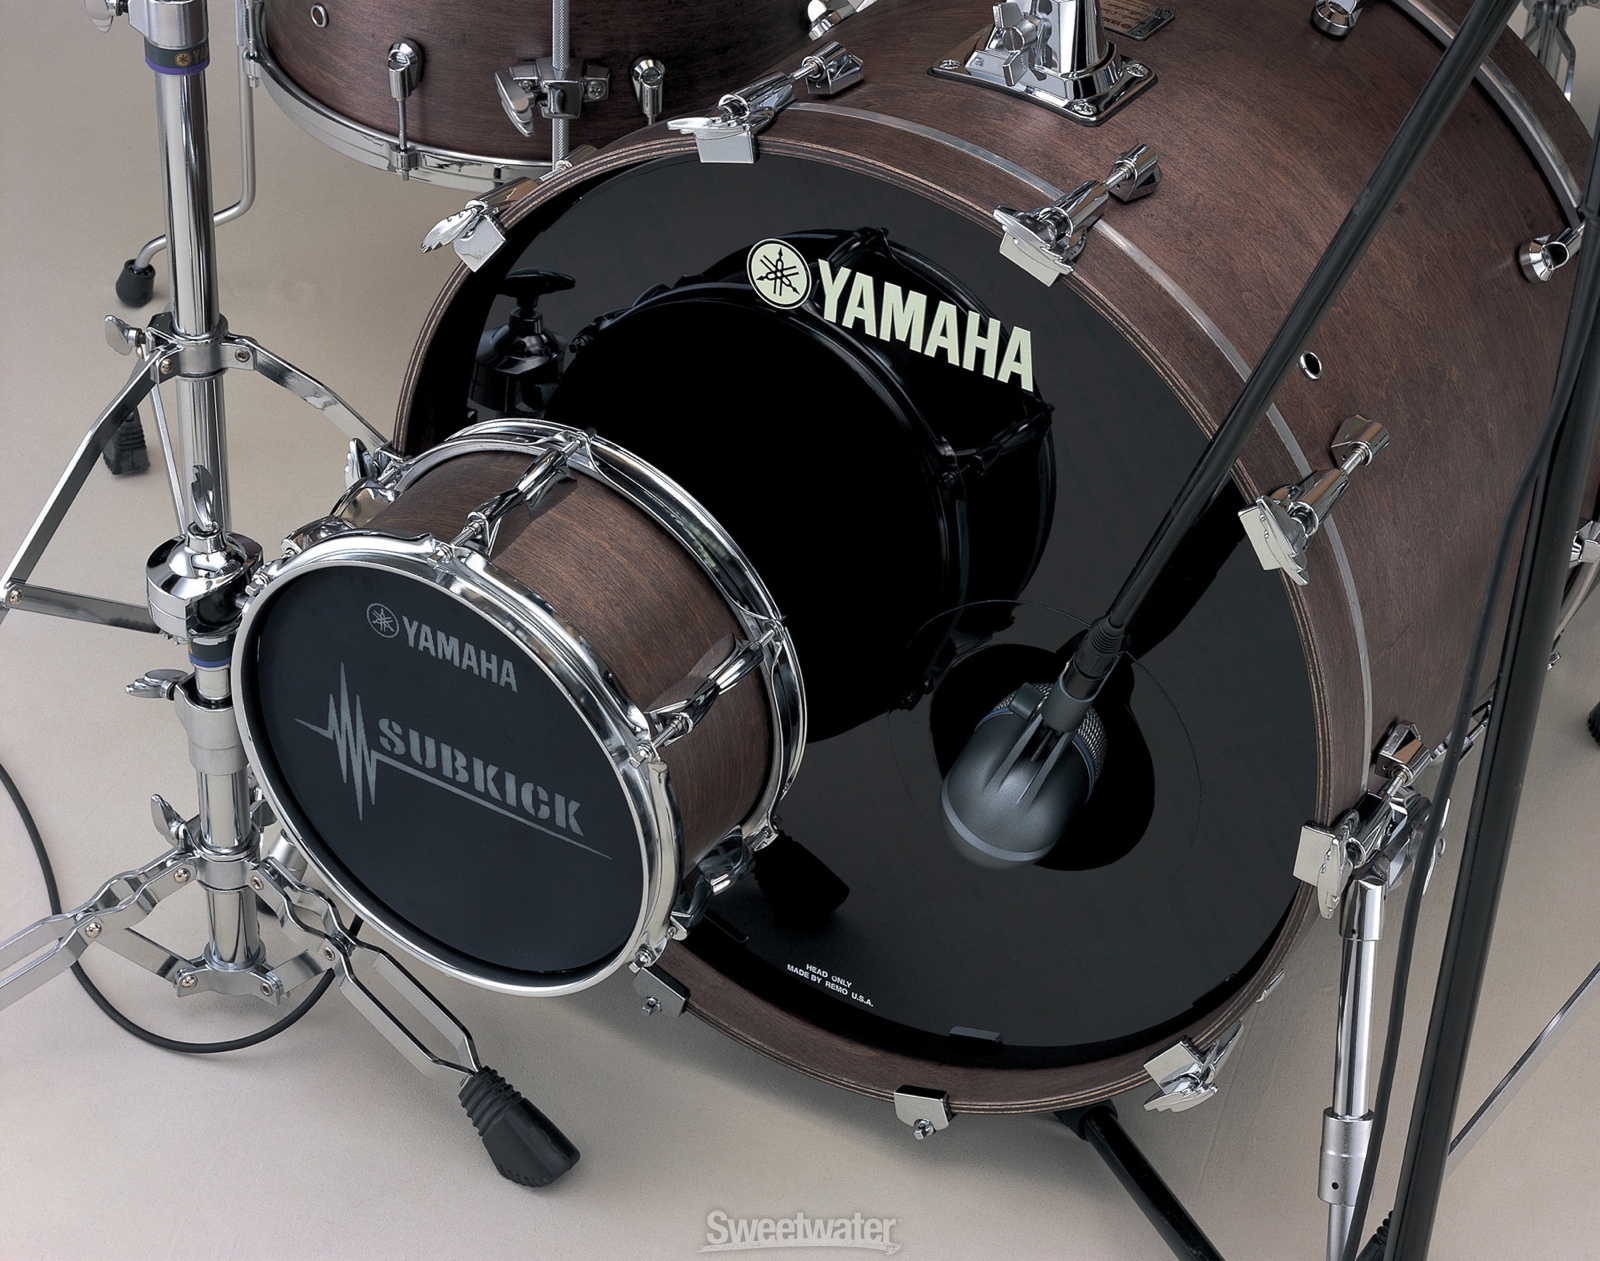 Yamaha Skrm100 Subkick